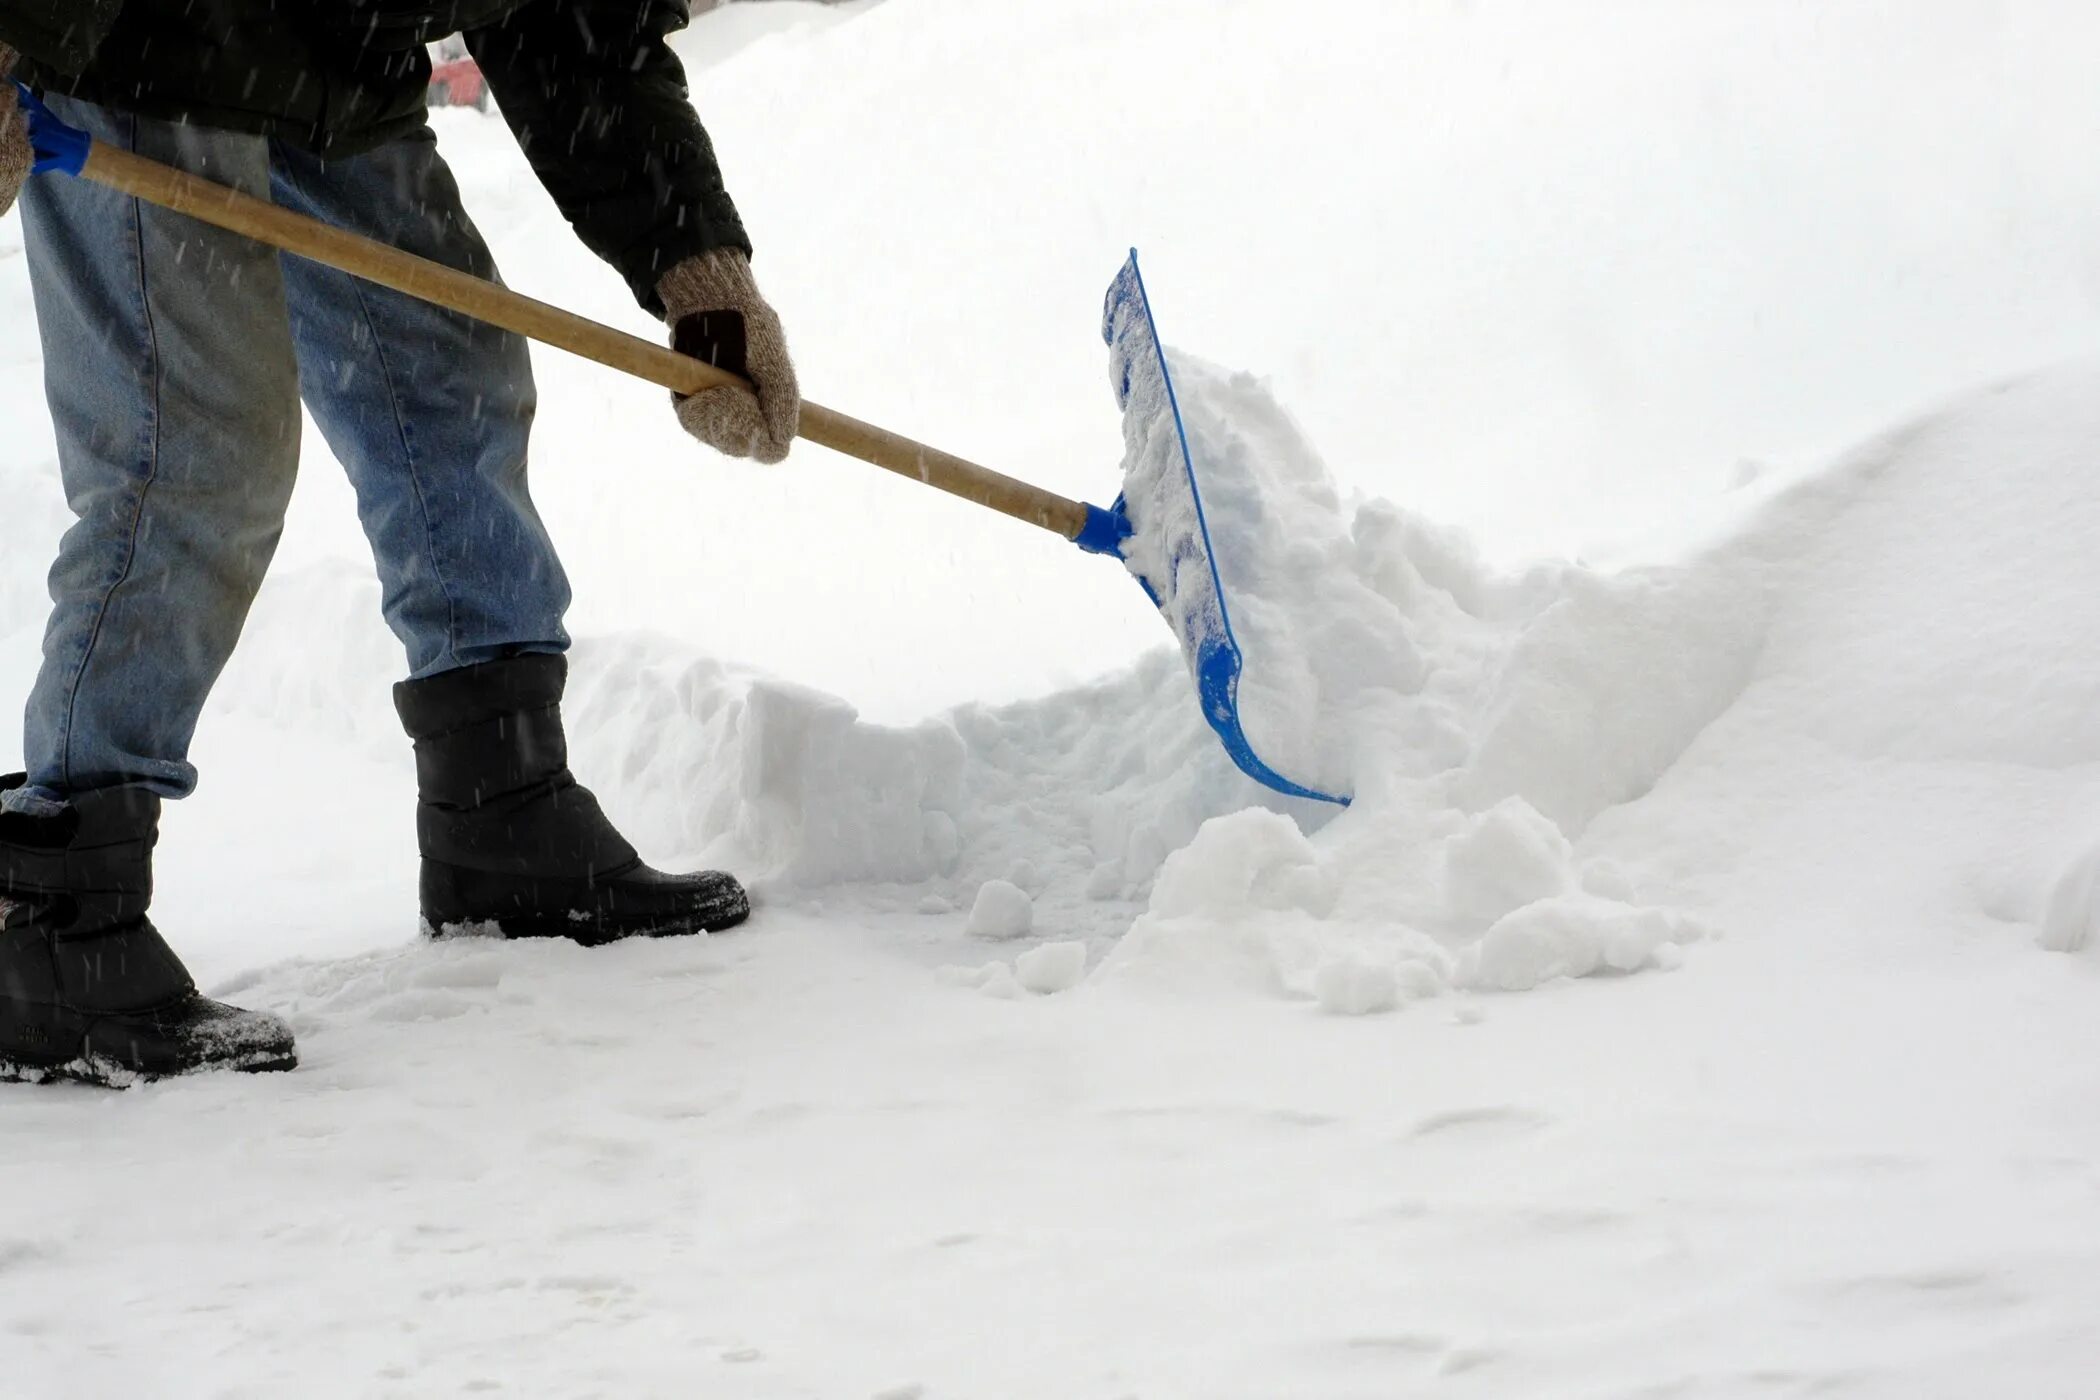 Кидает лопатой. Уборка снега. Лопата для уборки снега. Убирает снег. Уборкака снега.